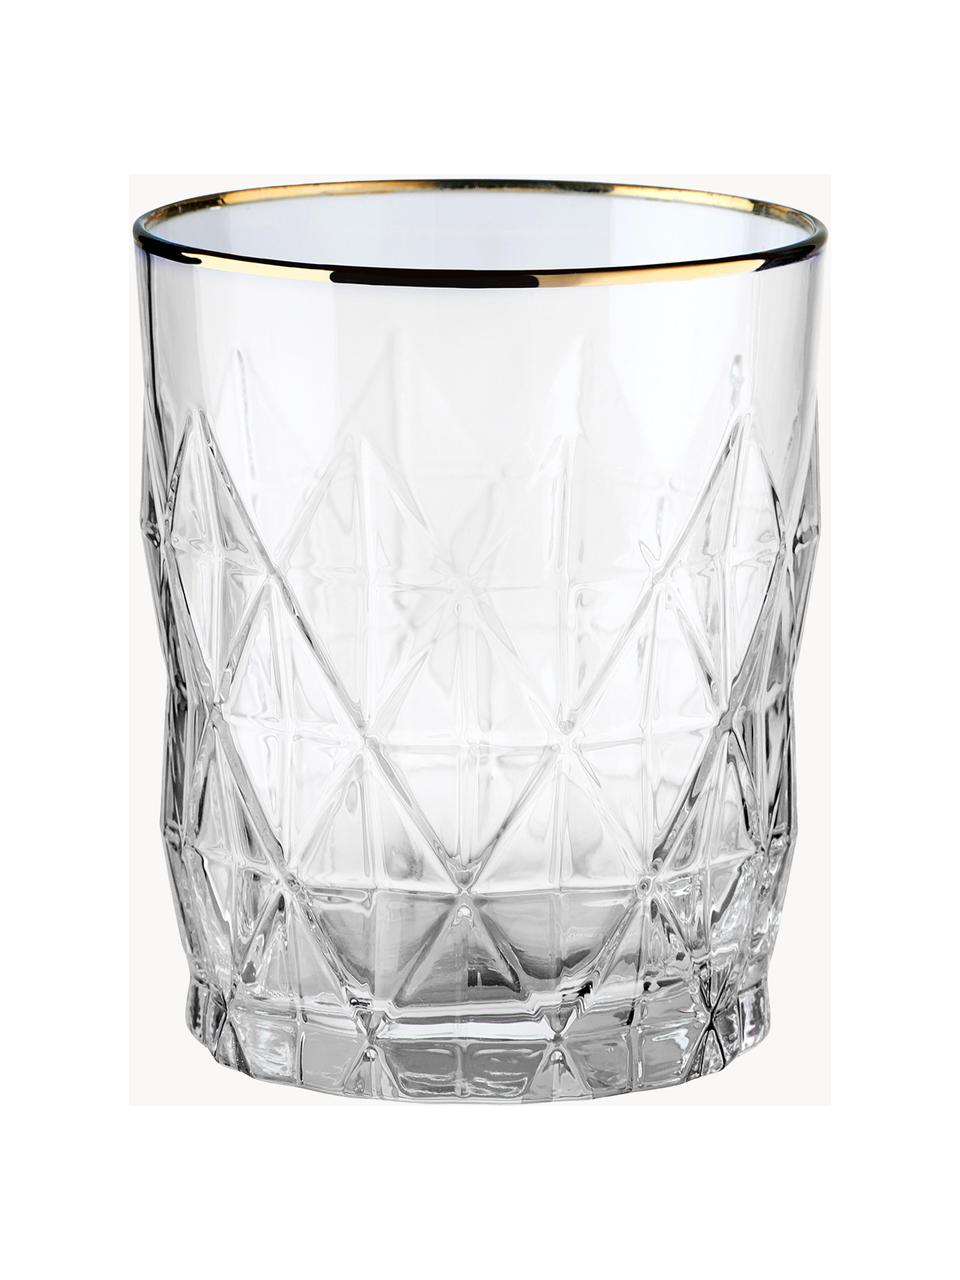 Waterglazen Upscale met structuurpatroon, 6 stuks, Glas, Transparant met goudkleurige rand, Ø 8 x H 10 cm, 345 ml